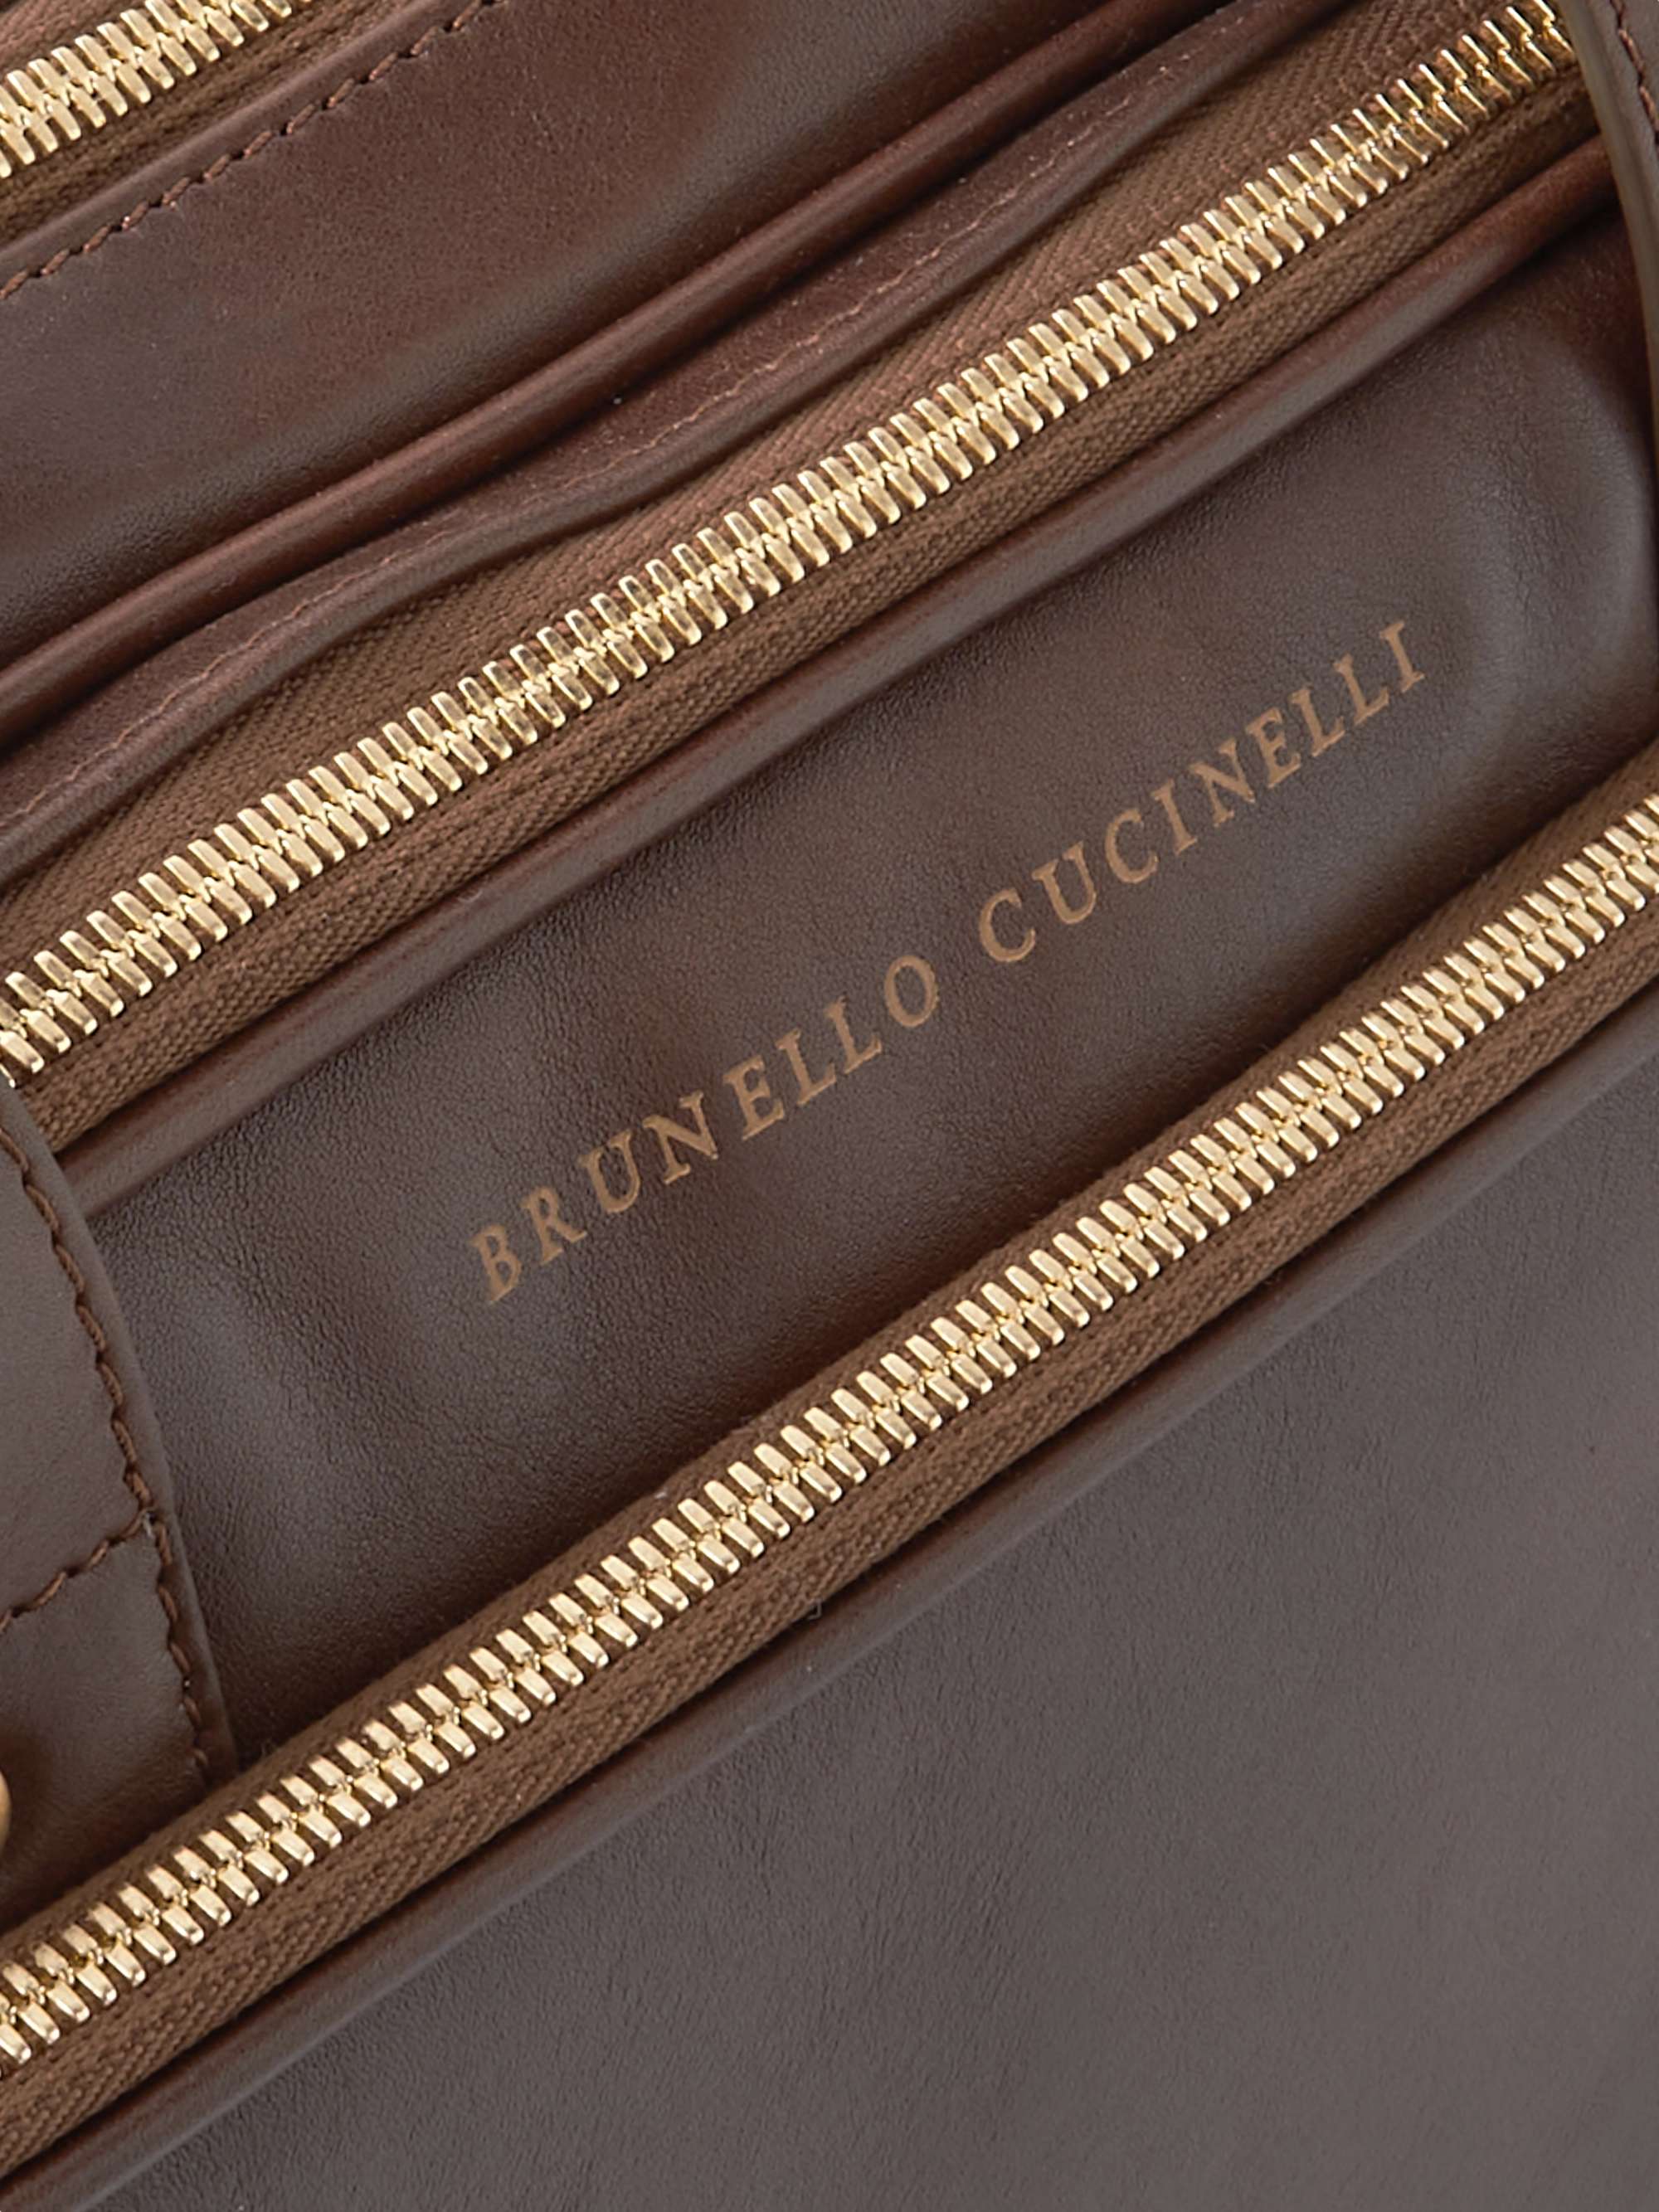 BRUNELLO CUCINELLI Leather Briefcase